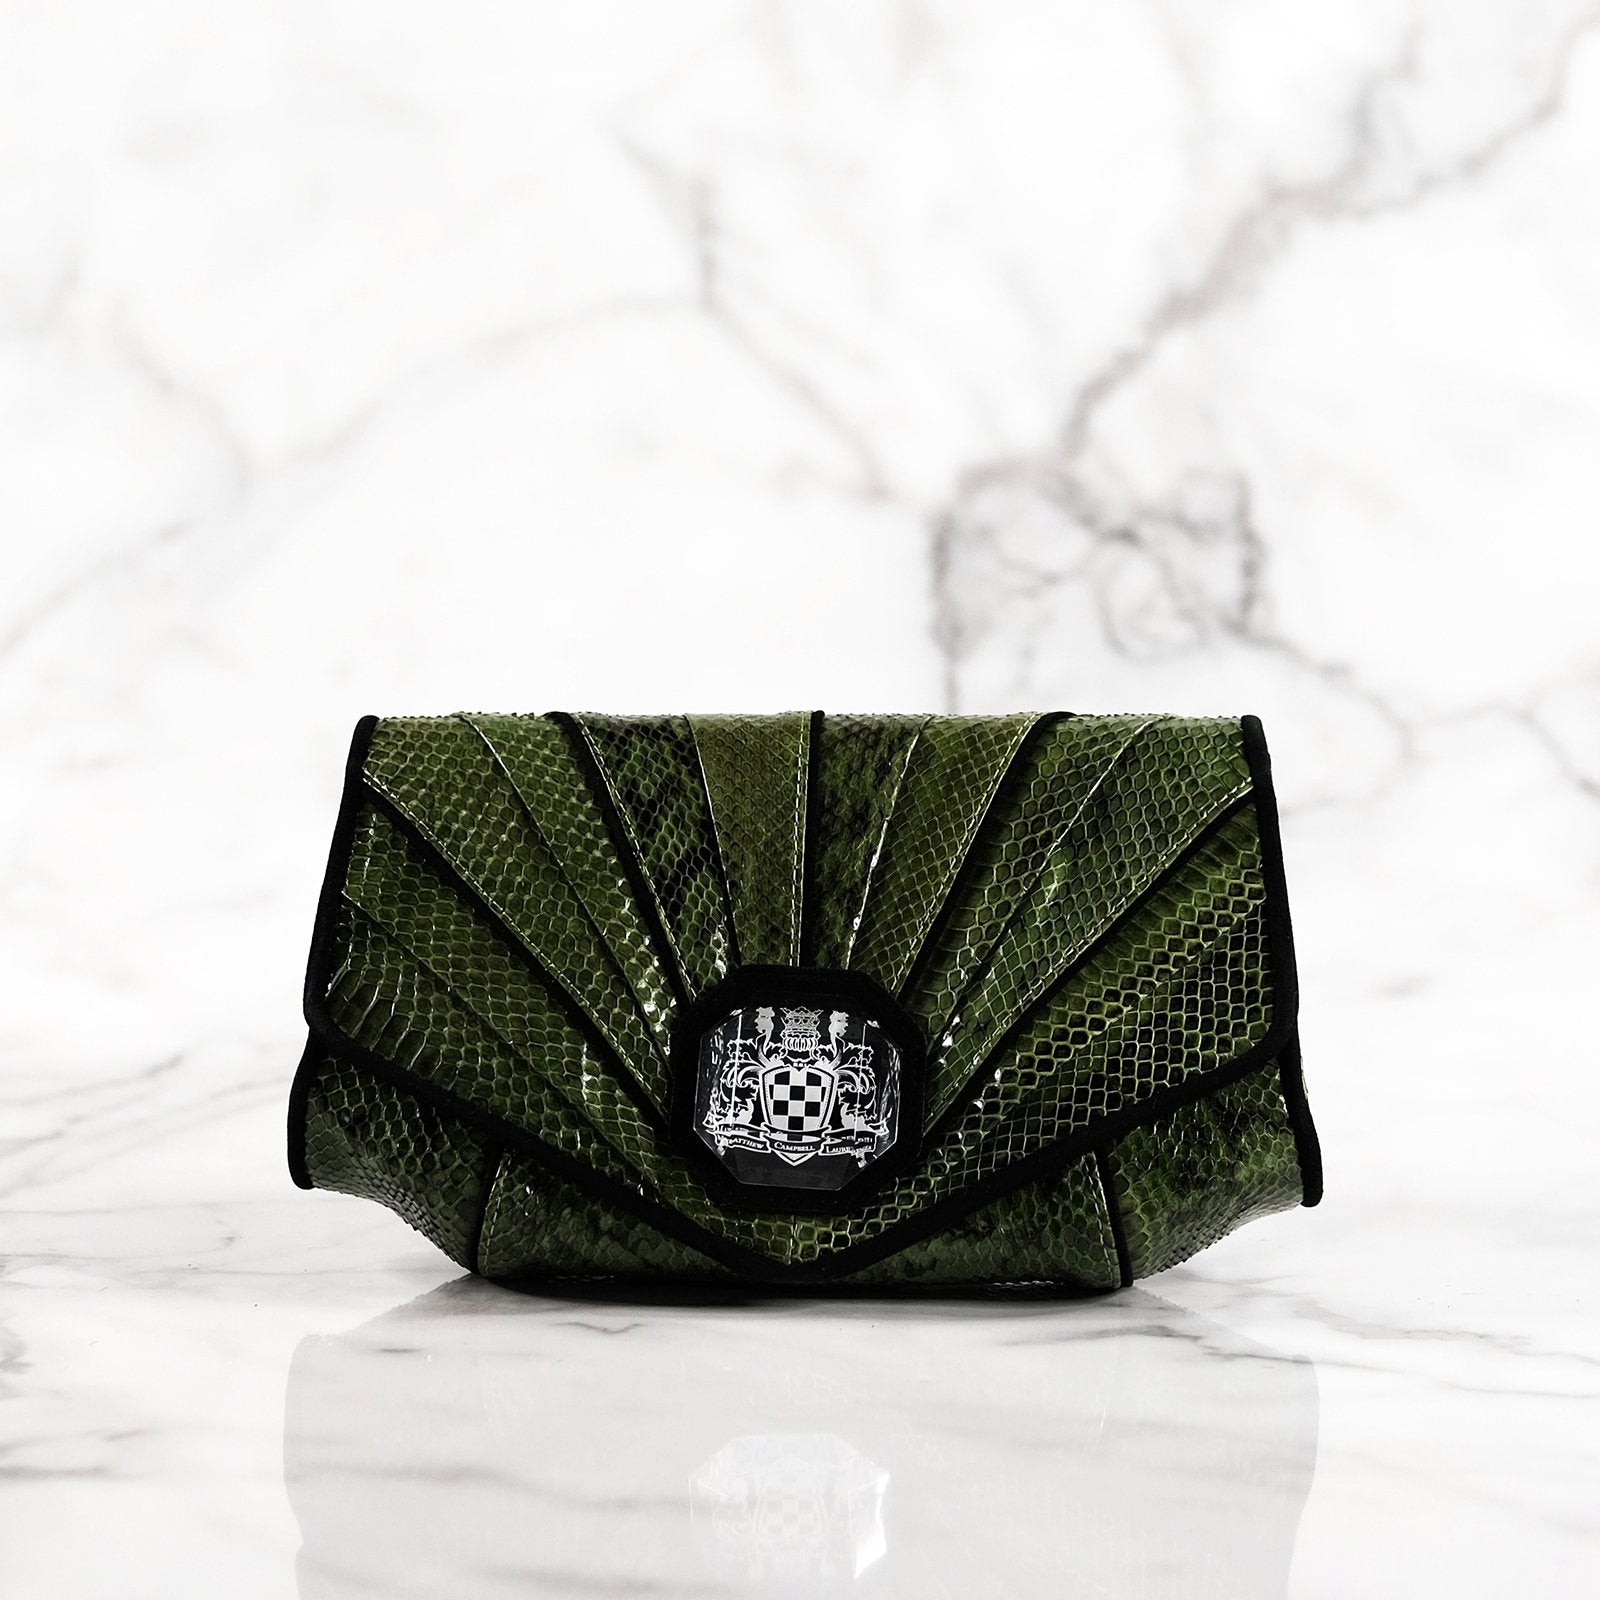 Ophelia olive green watersnake skin handbag